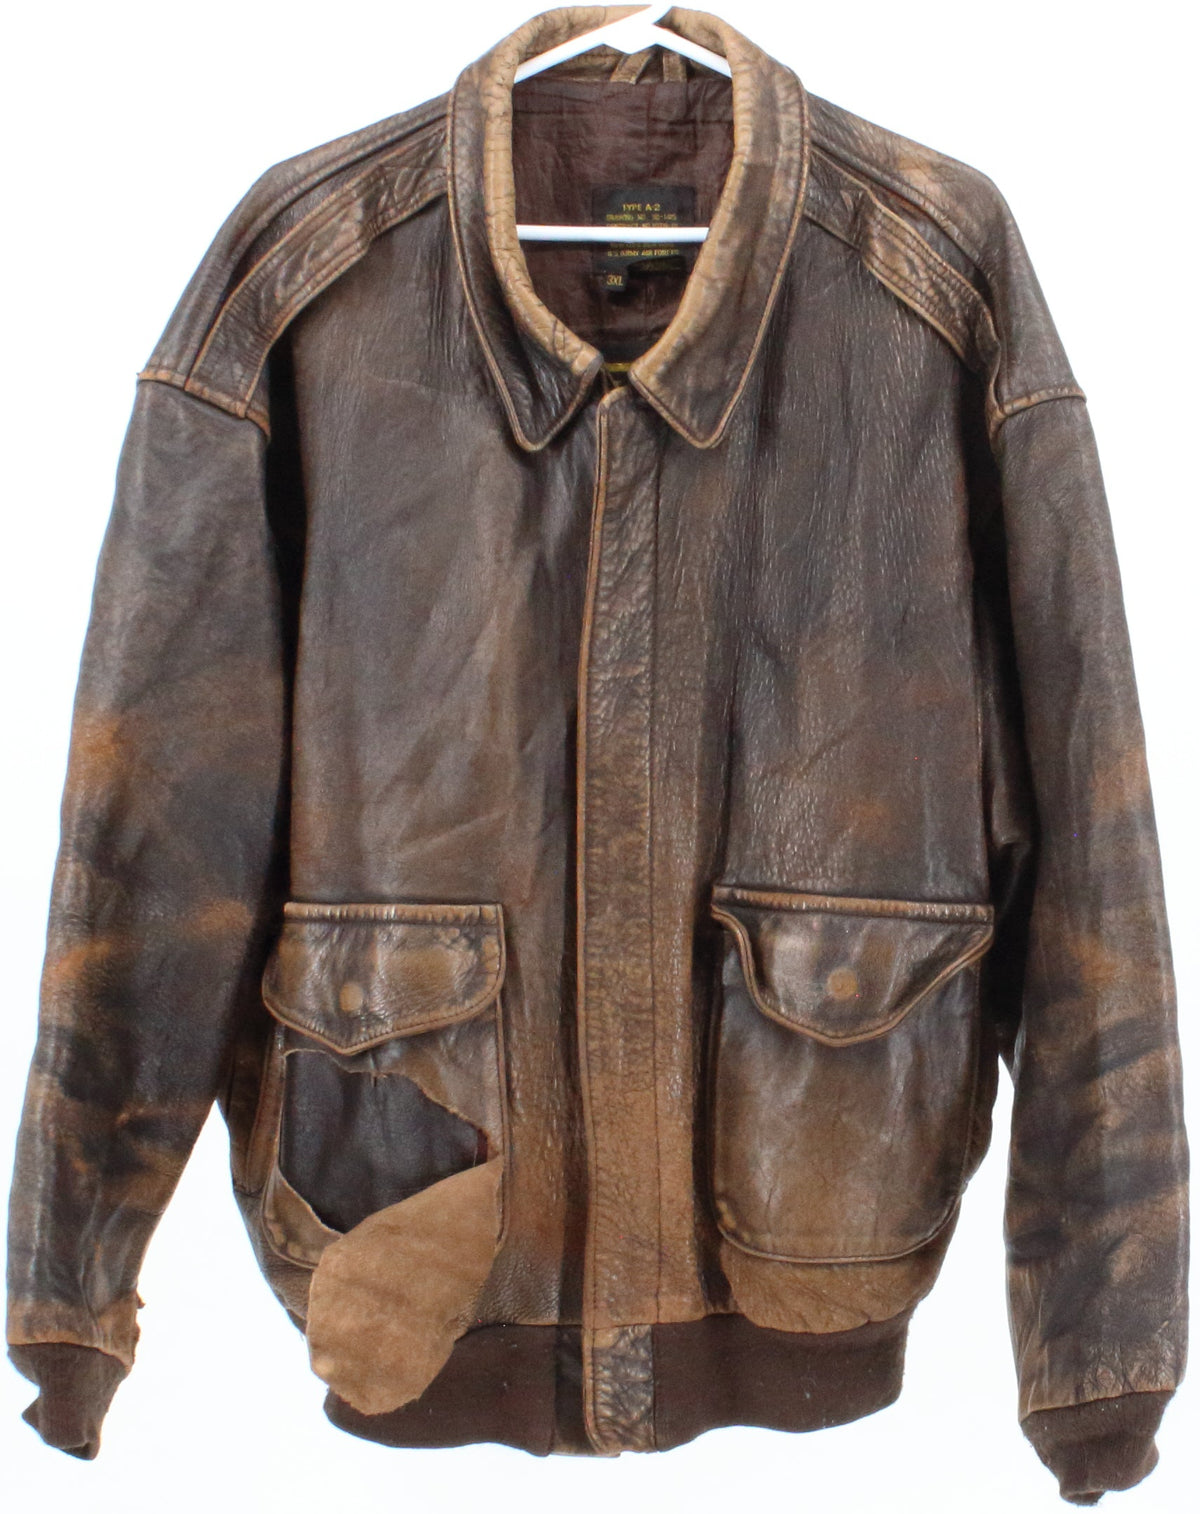 Authentic Avirex Flight Garment Brown Leather Jacket